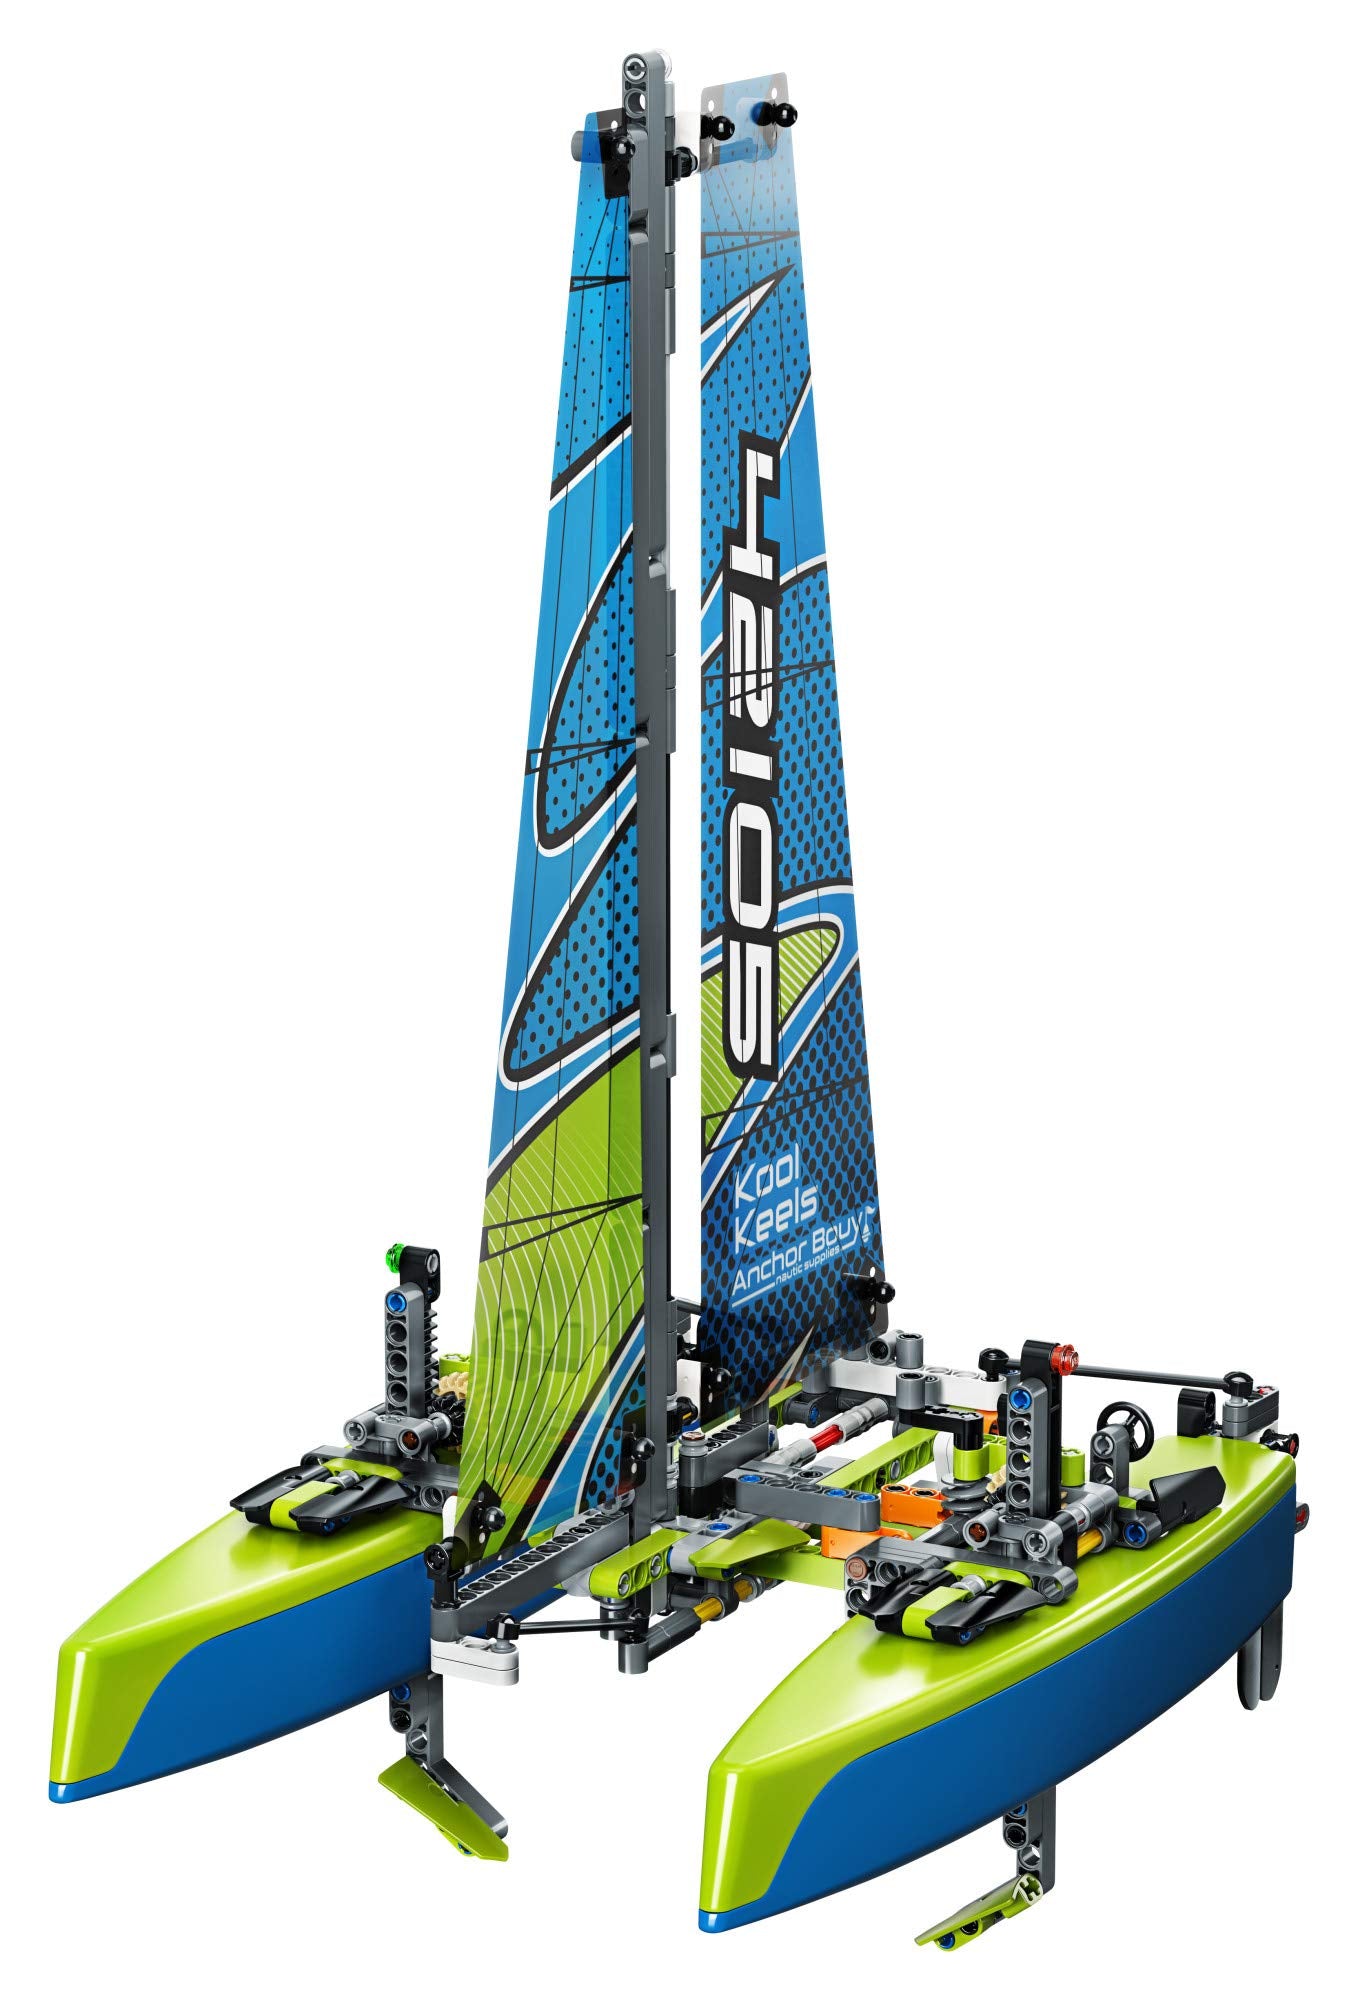 LEGO Technic Catamaran 42105 Model Sailboat Building Kit, New 2020 (404 Pieces)